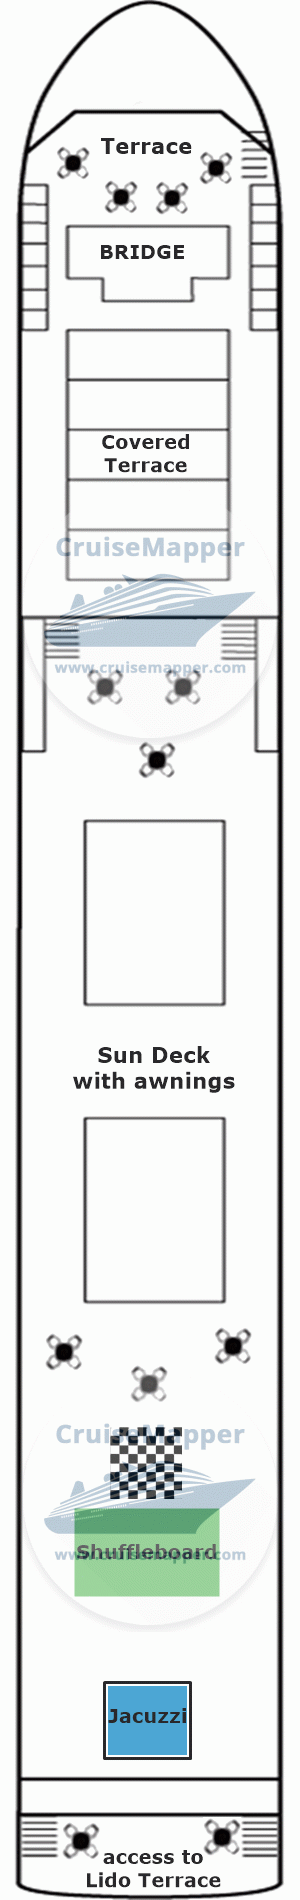 MS Adora Deck 04 - Sundeck-Pool